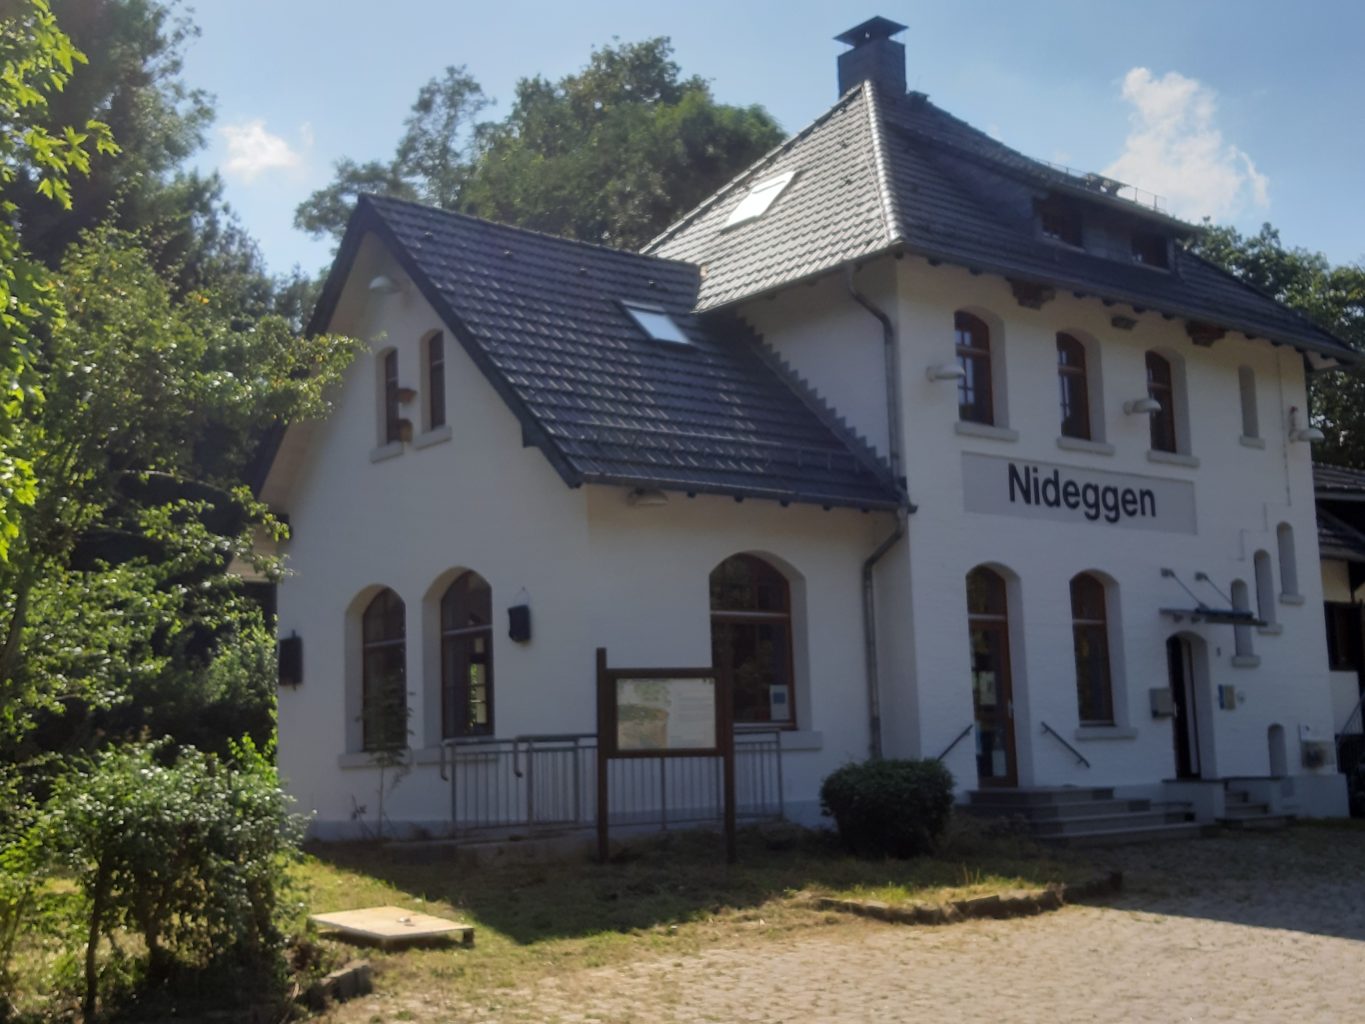 Bahnhof Nideggen - Biologische Station